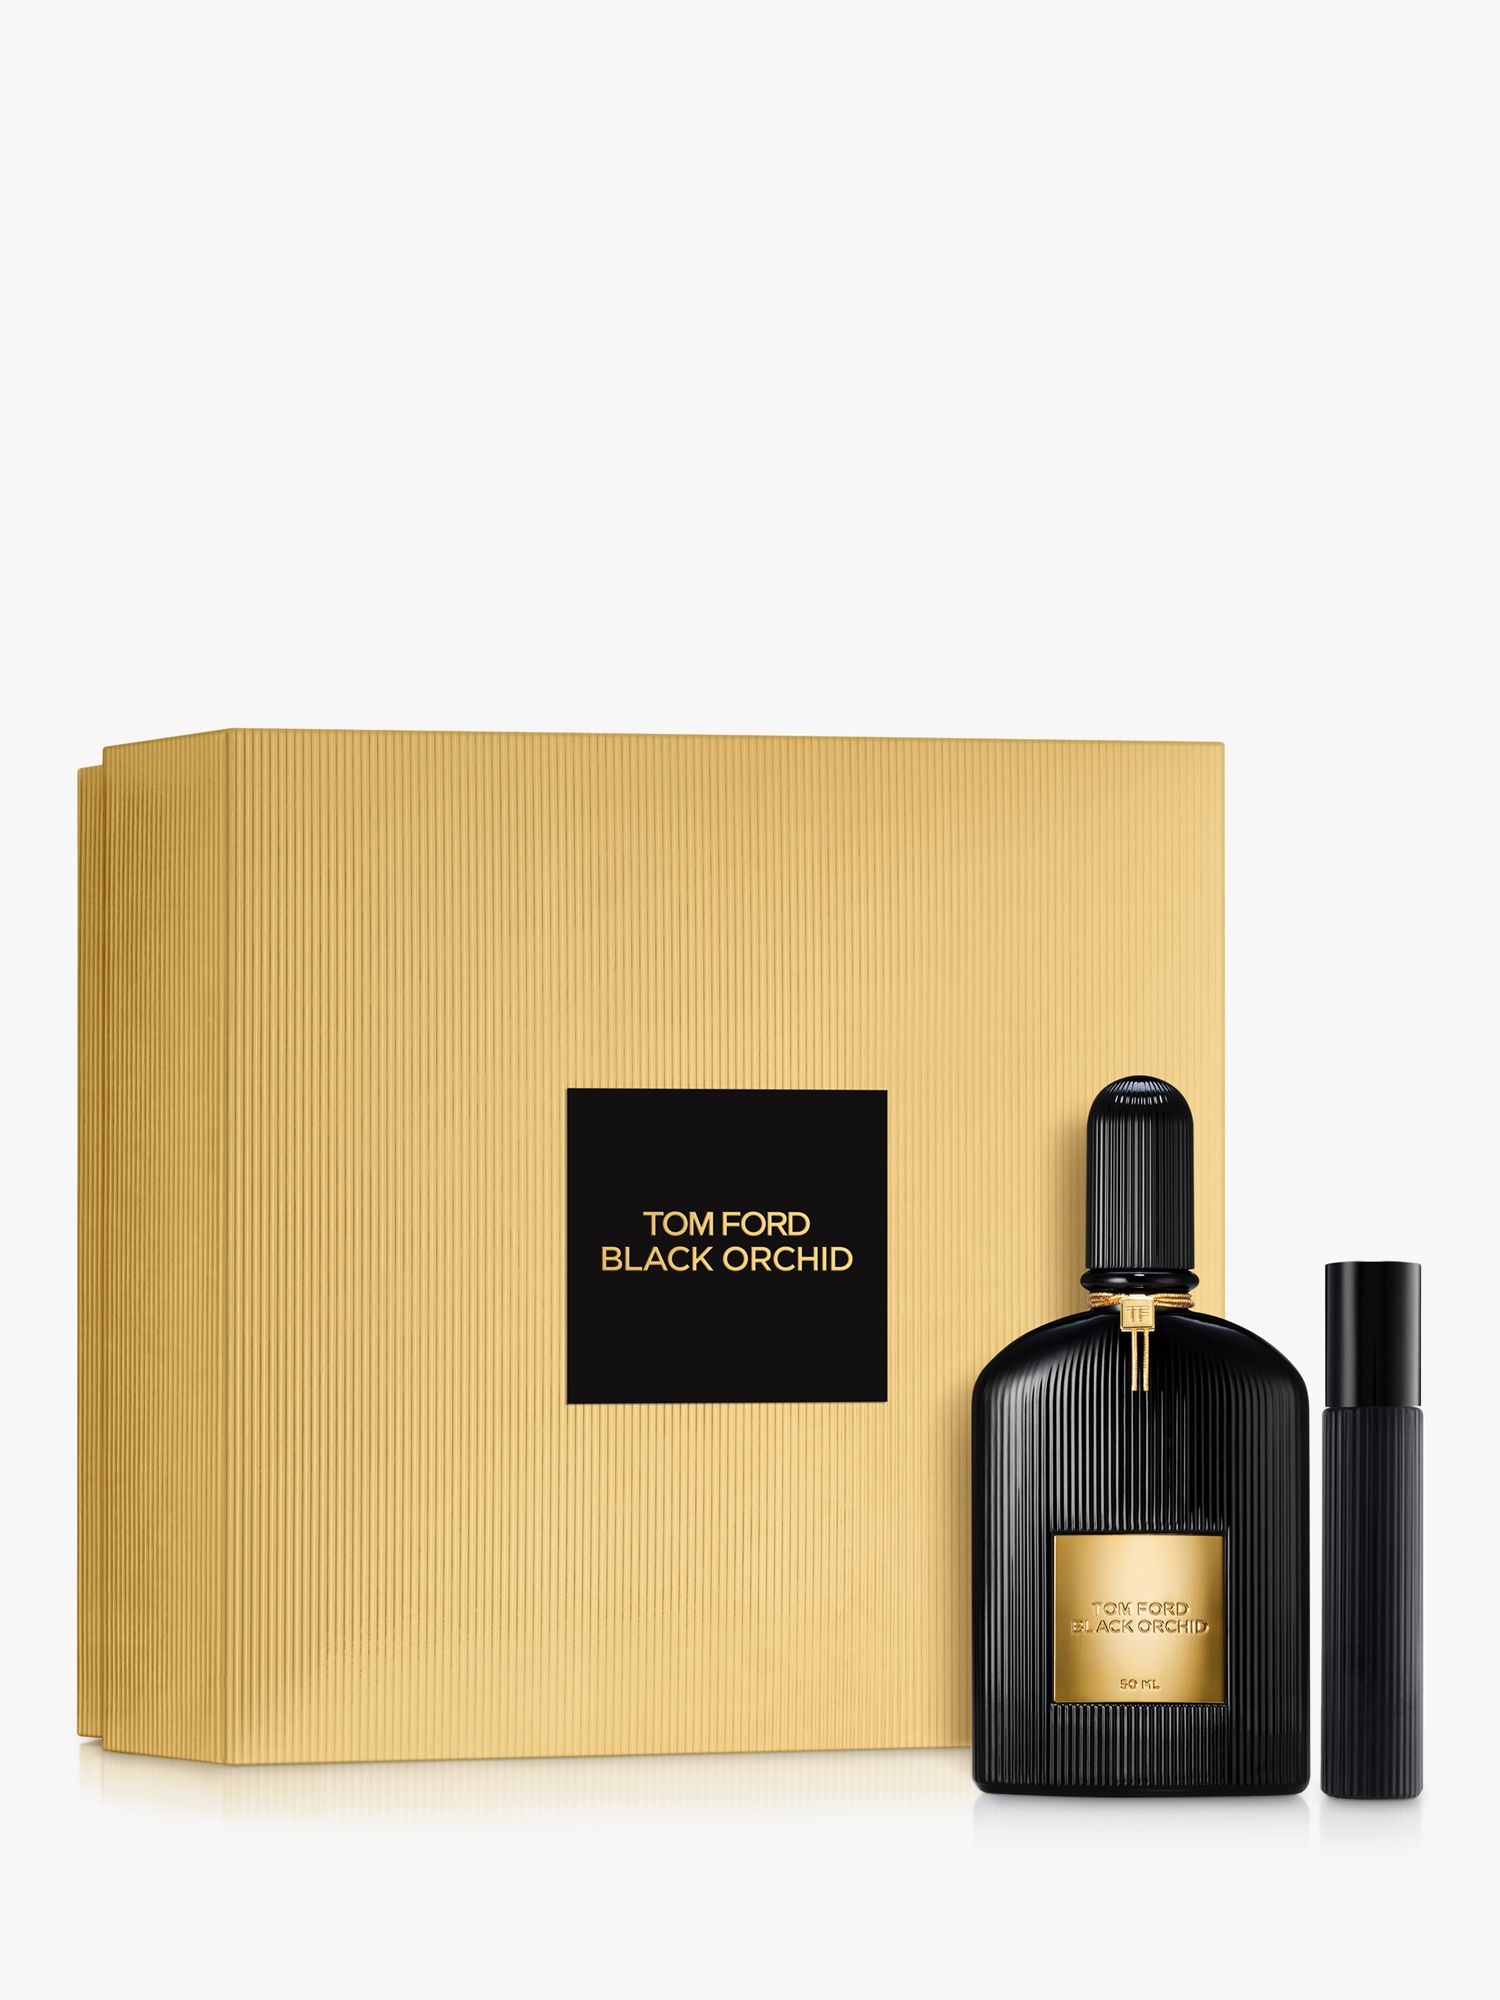 TOM FORD Black Orchid Eau de Parfum 50ml Fragrance Gift Set